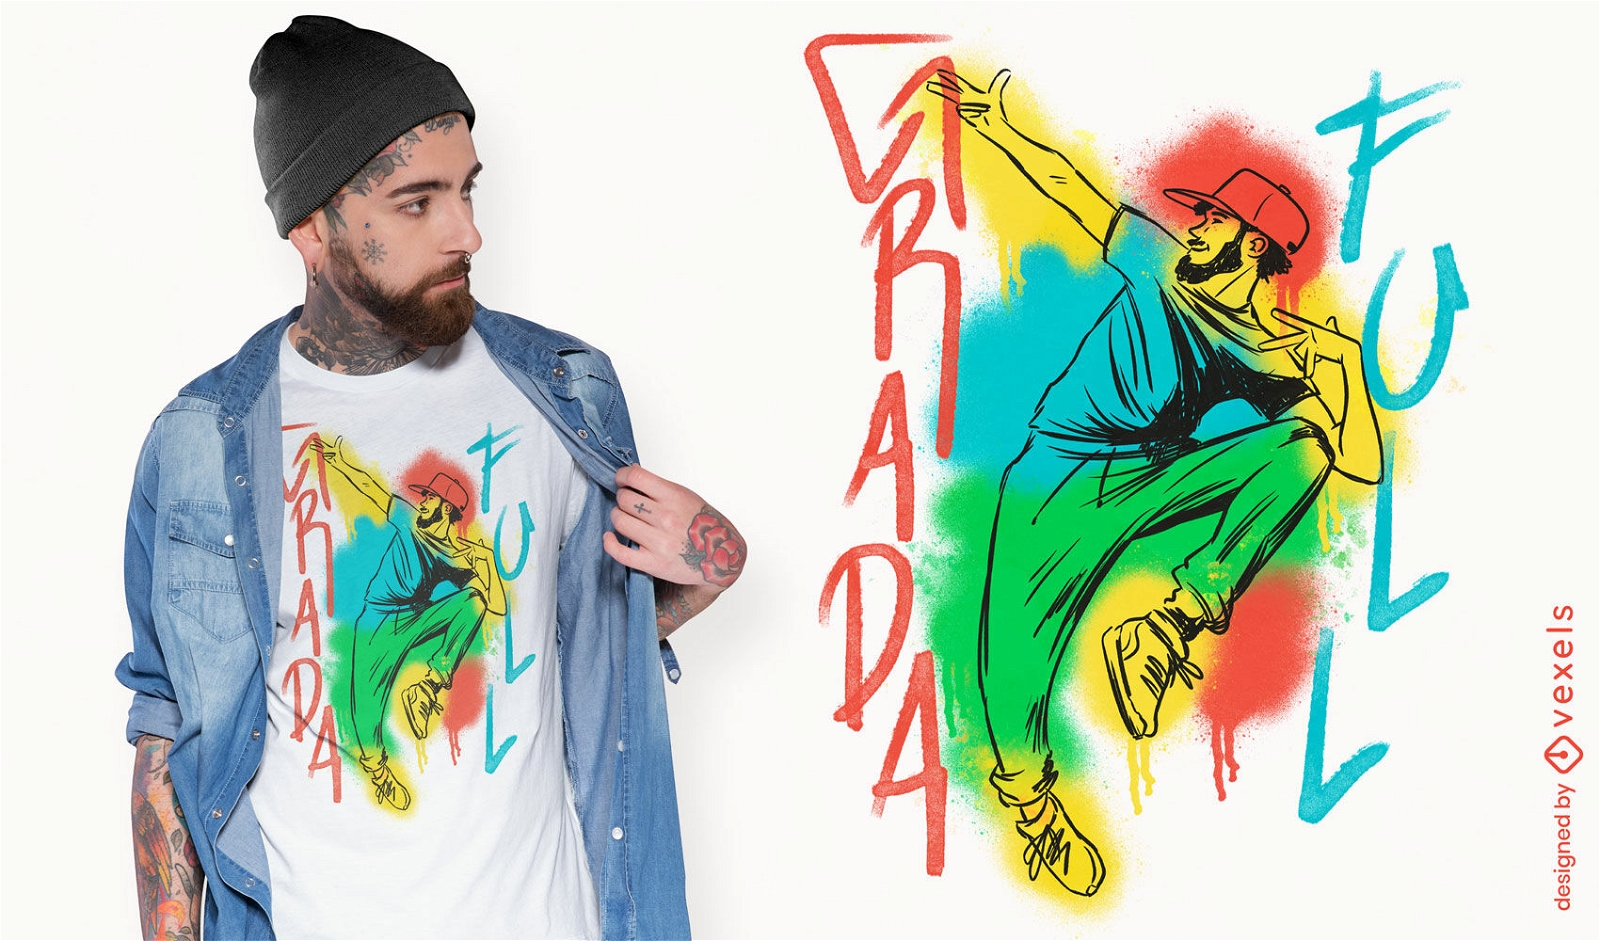 Diseño de camiseta de graffiti de bailarina de hip hop